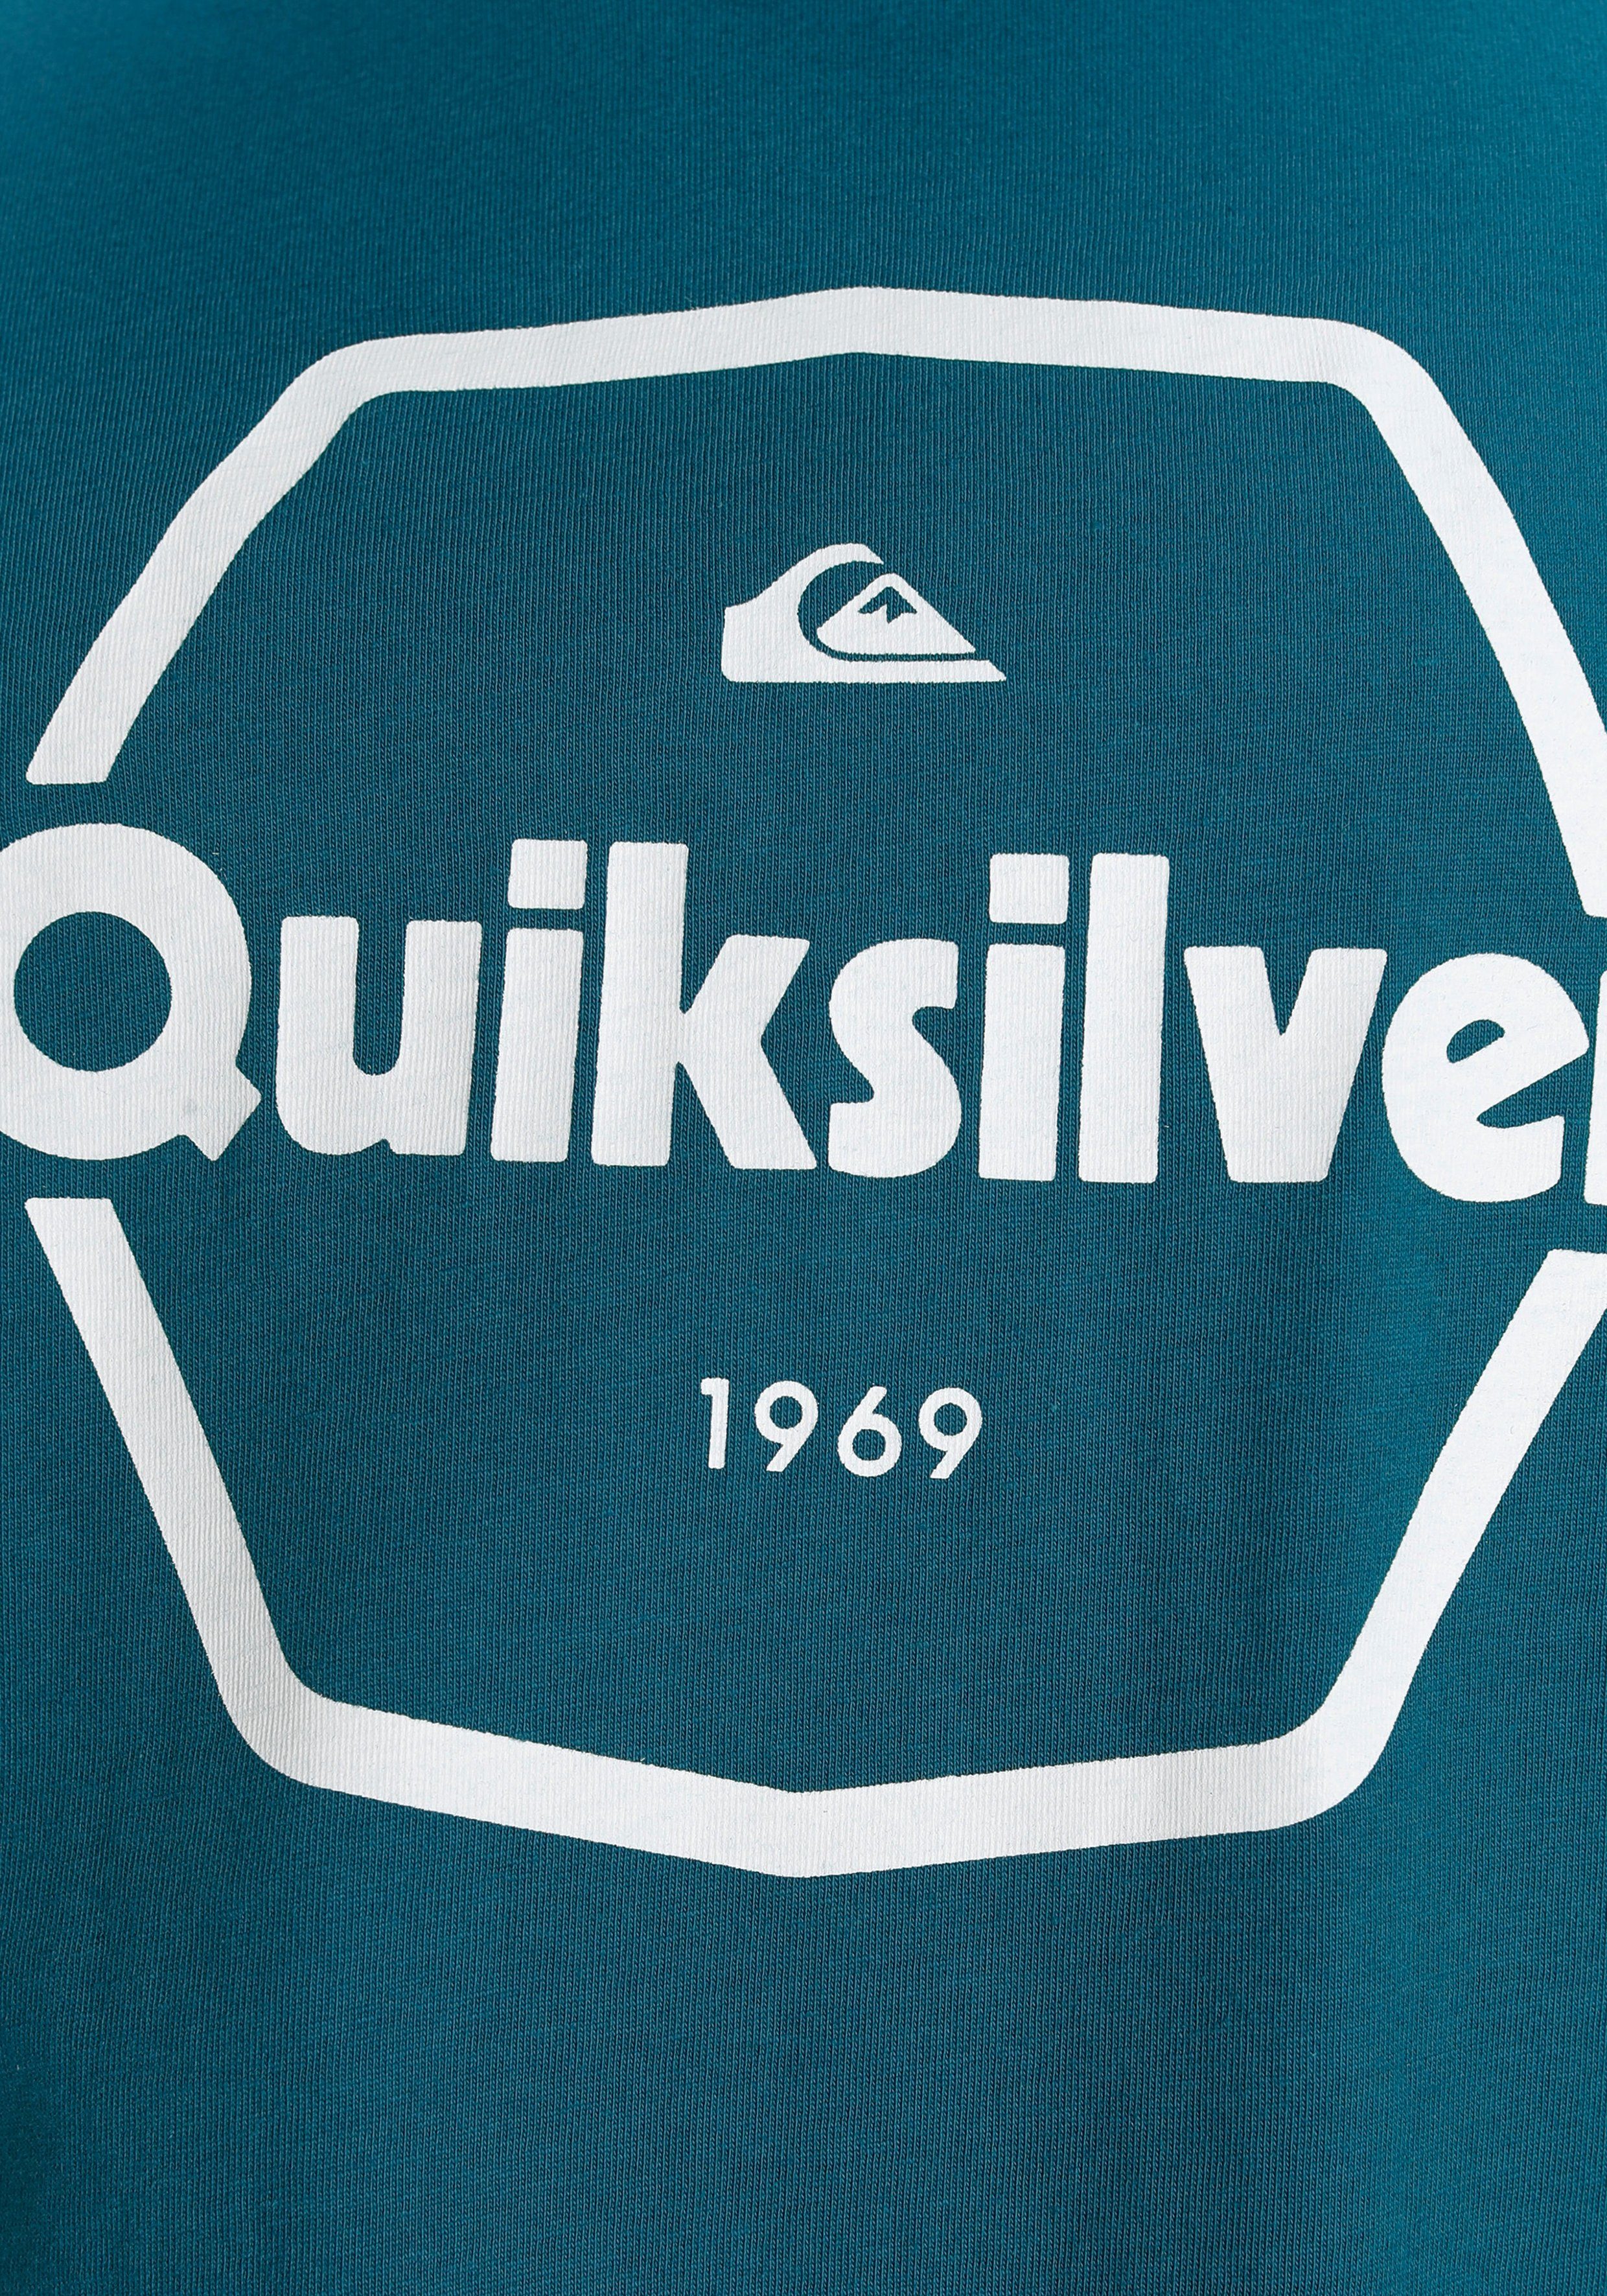 mit Quiksilver Doppelpack Logodruck (Packung, Jungen T-Shirt 2-tlg)